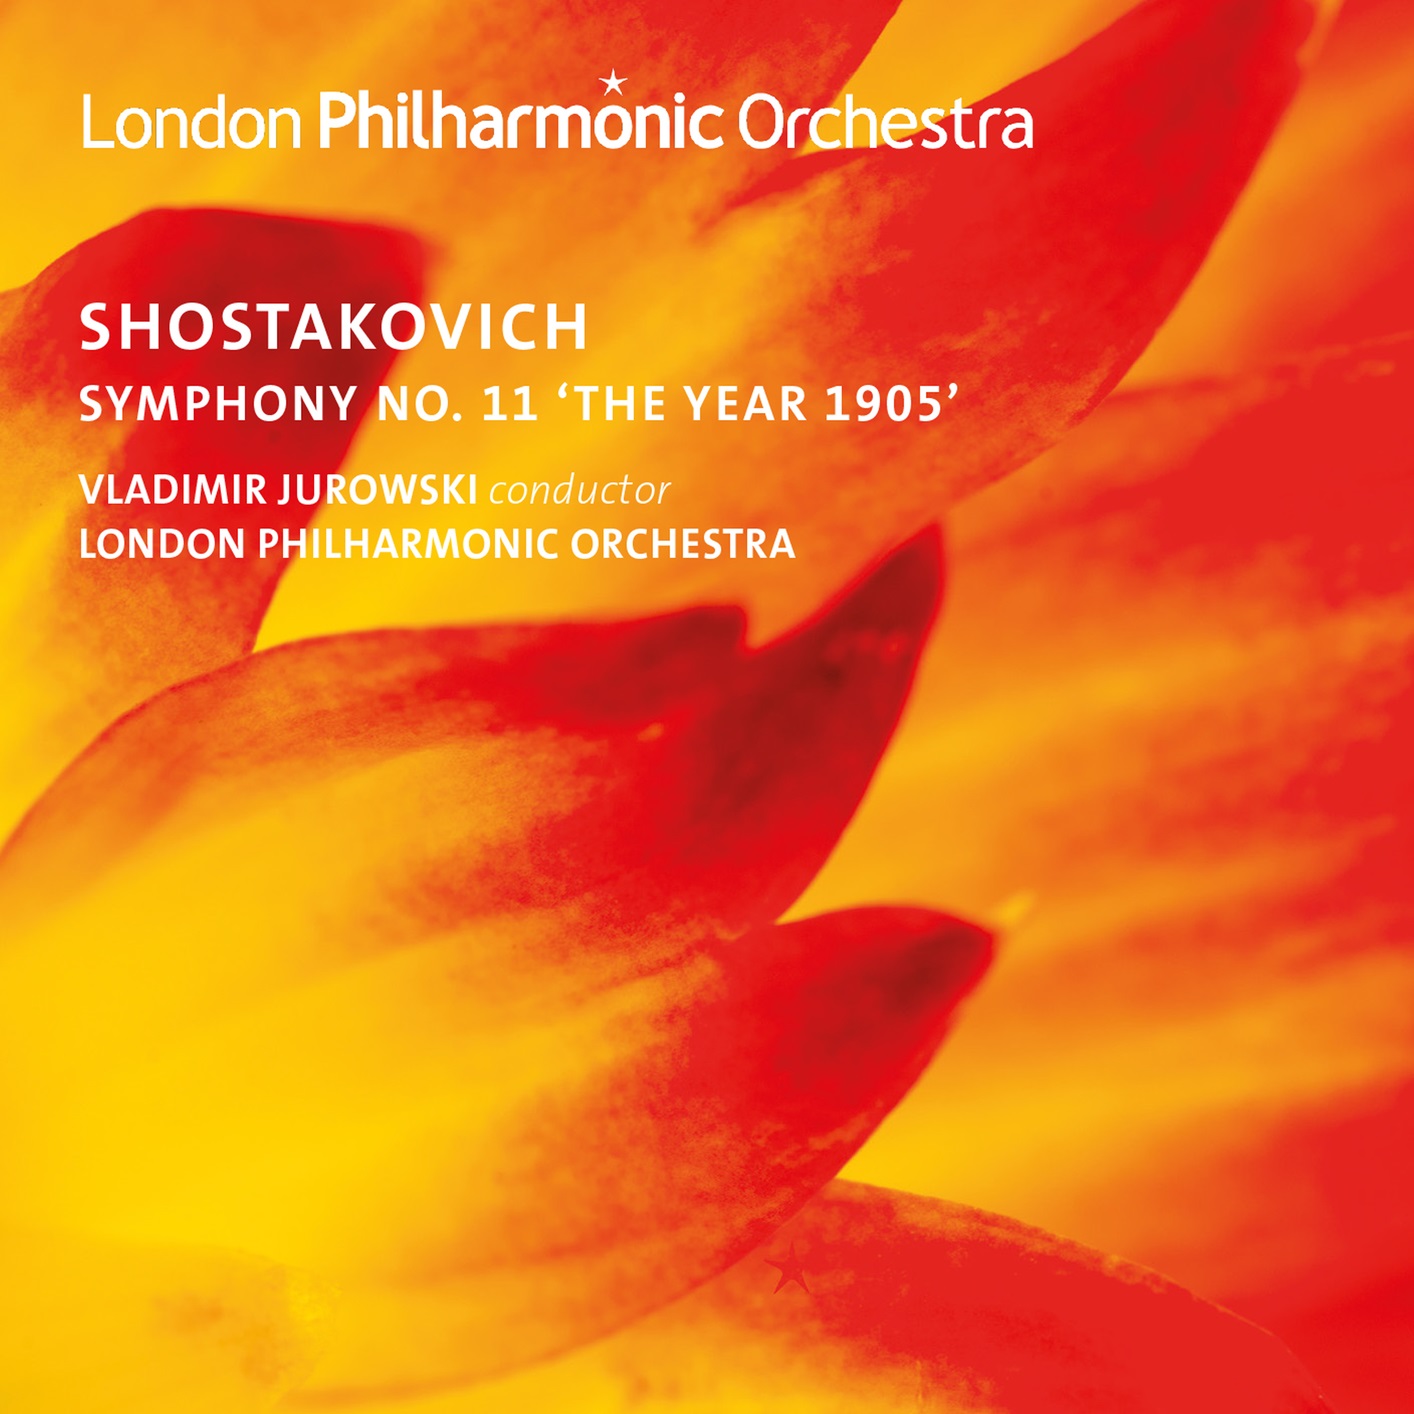 London Philharmonic Orchestra & Vladimir Jurowski - Symphony No. 11 in G Minor “The Year 1905” (2020) [FLAC 24bit/96kHz]